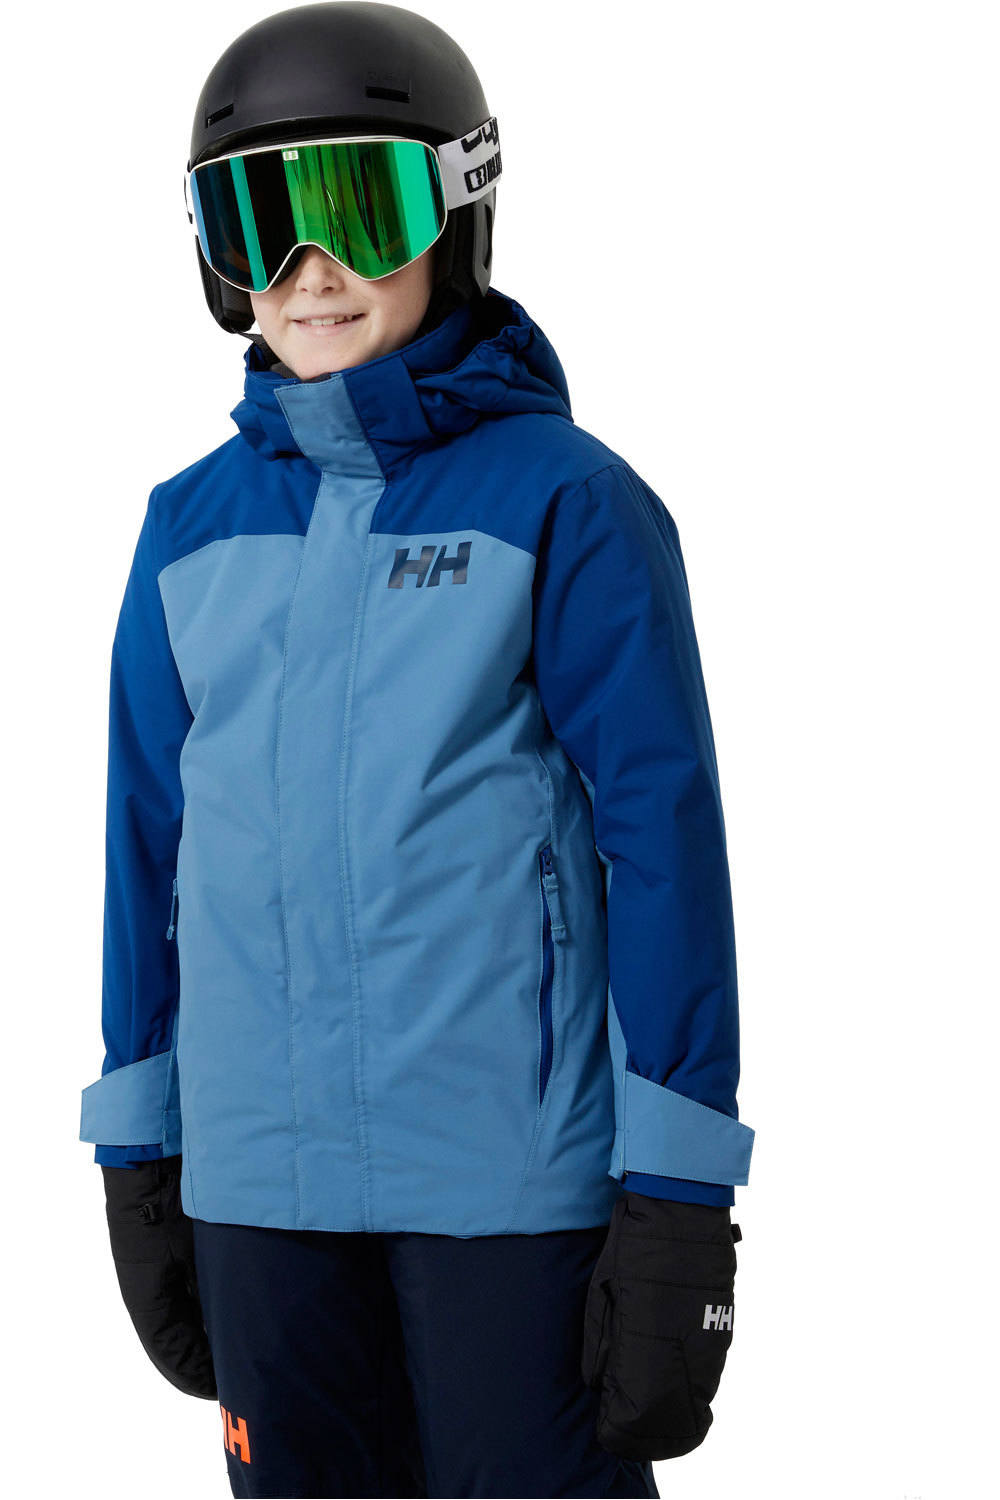 Helly Hansen chaqueta esquí infantil JR LEVEL JACKET vista frontal